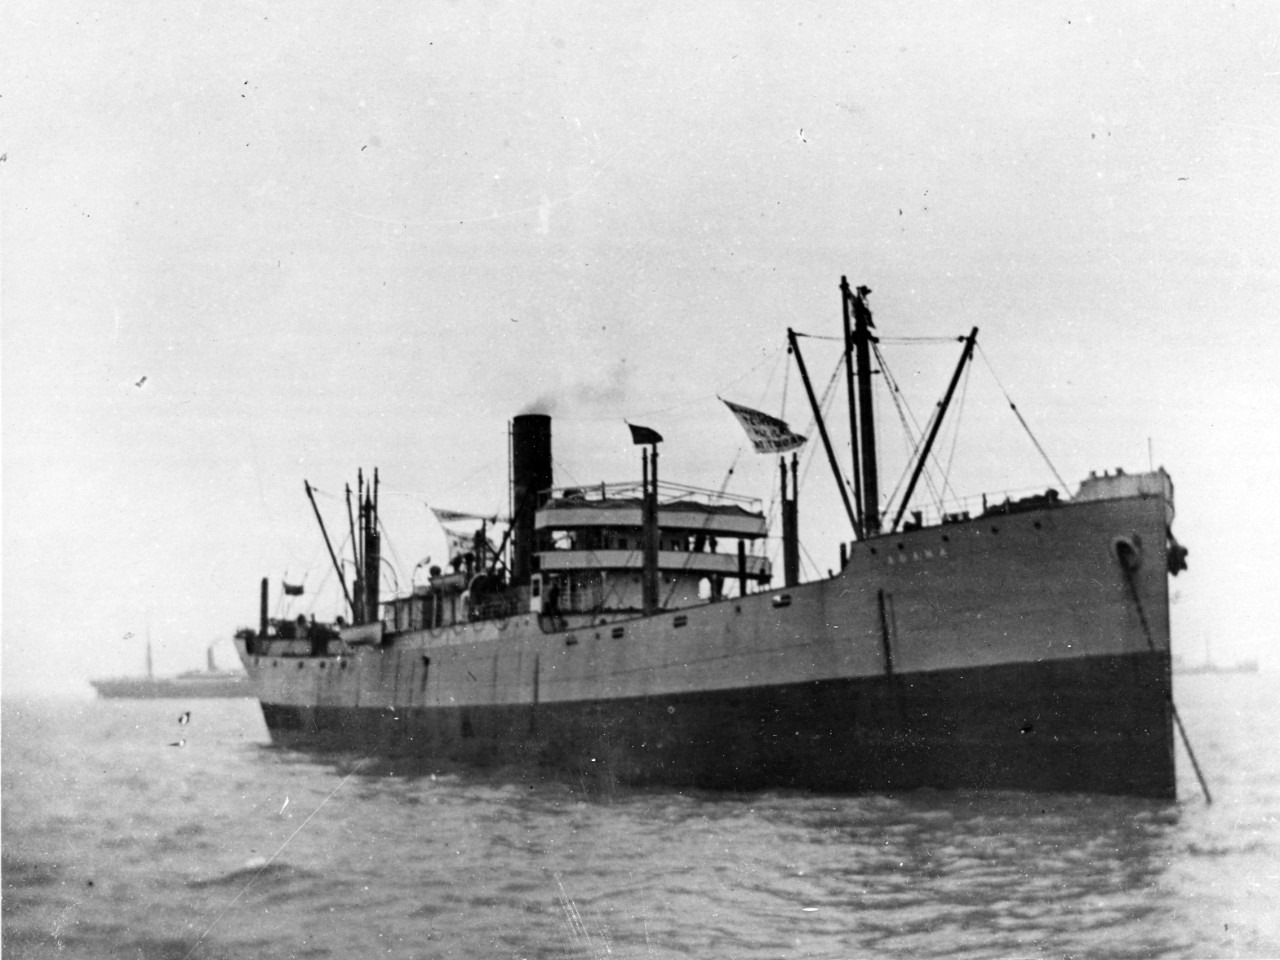 Belgian relief ship WABANA during World War I